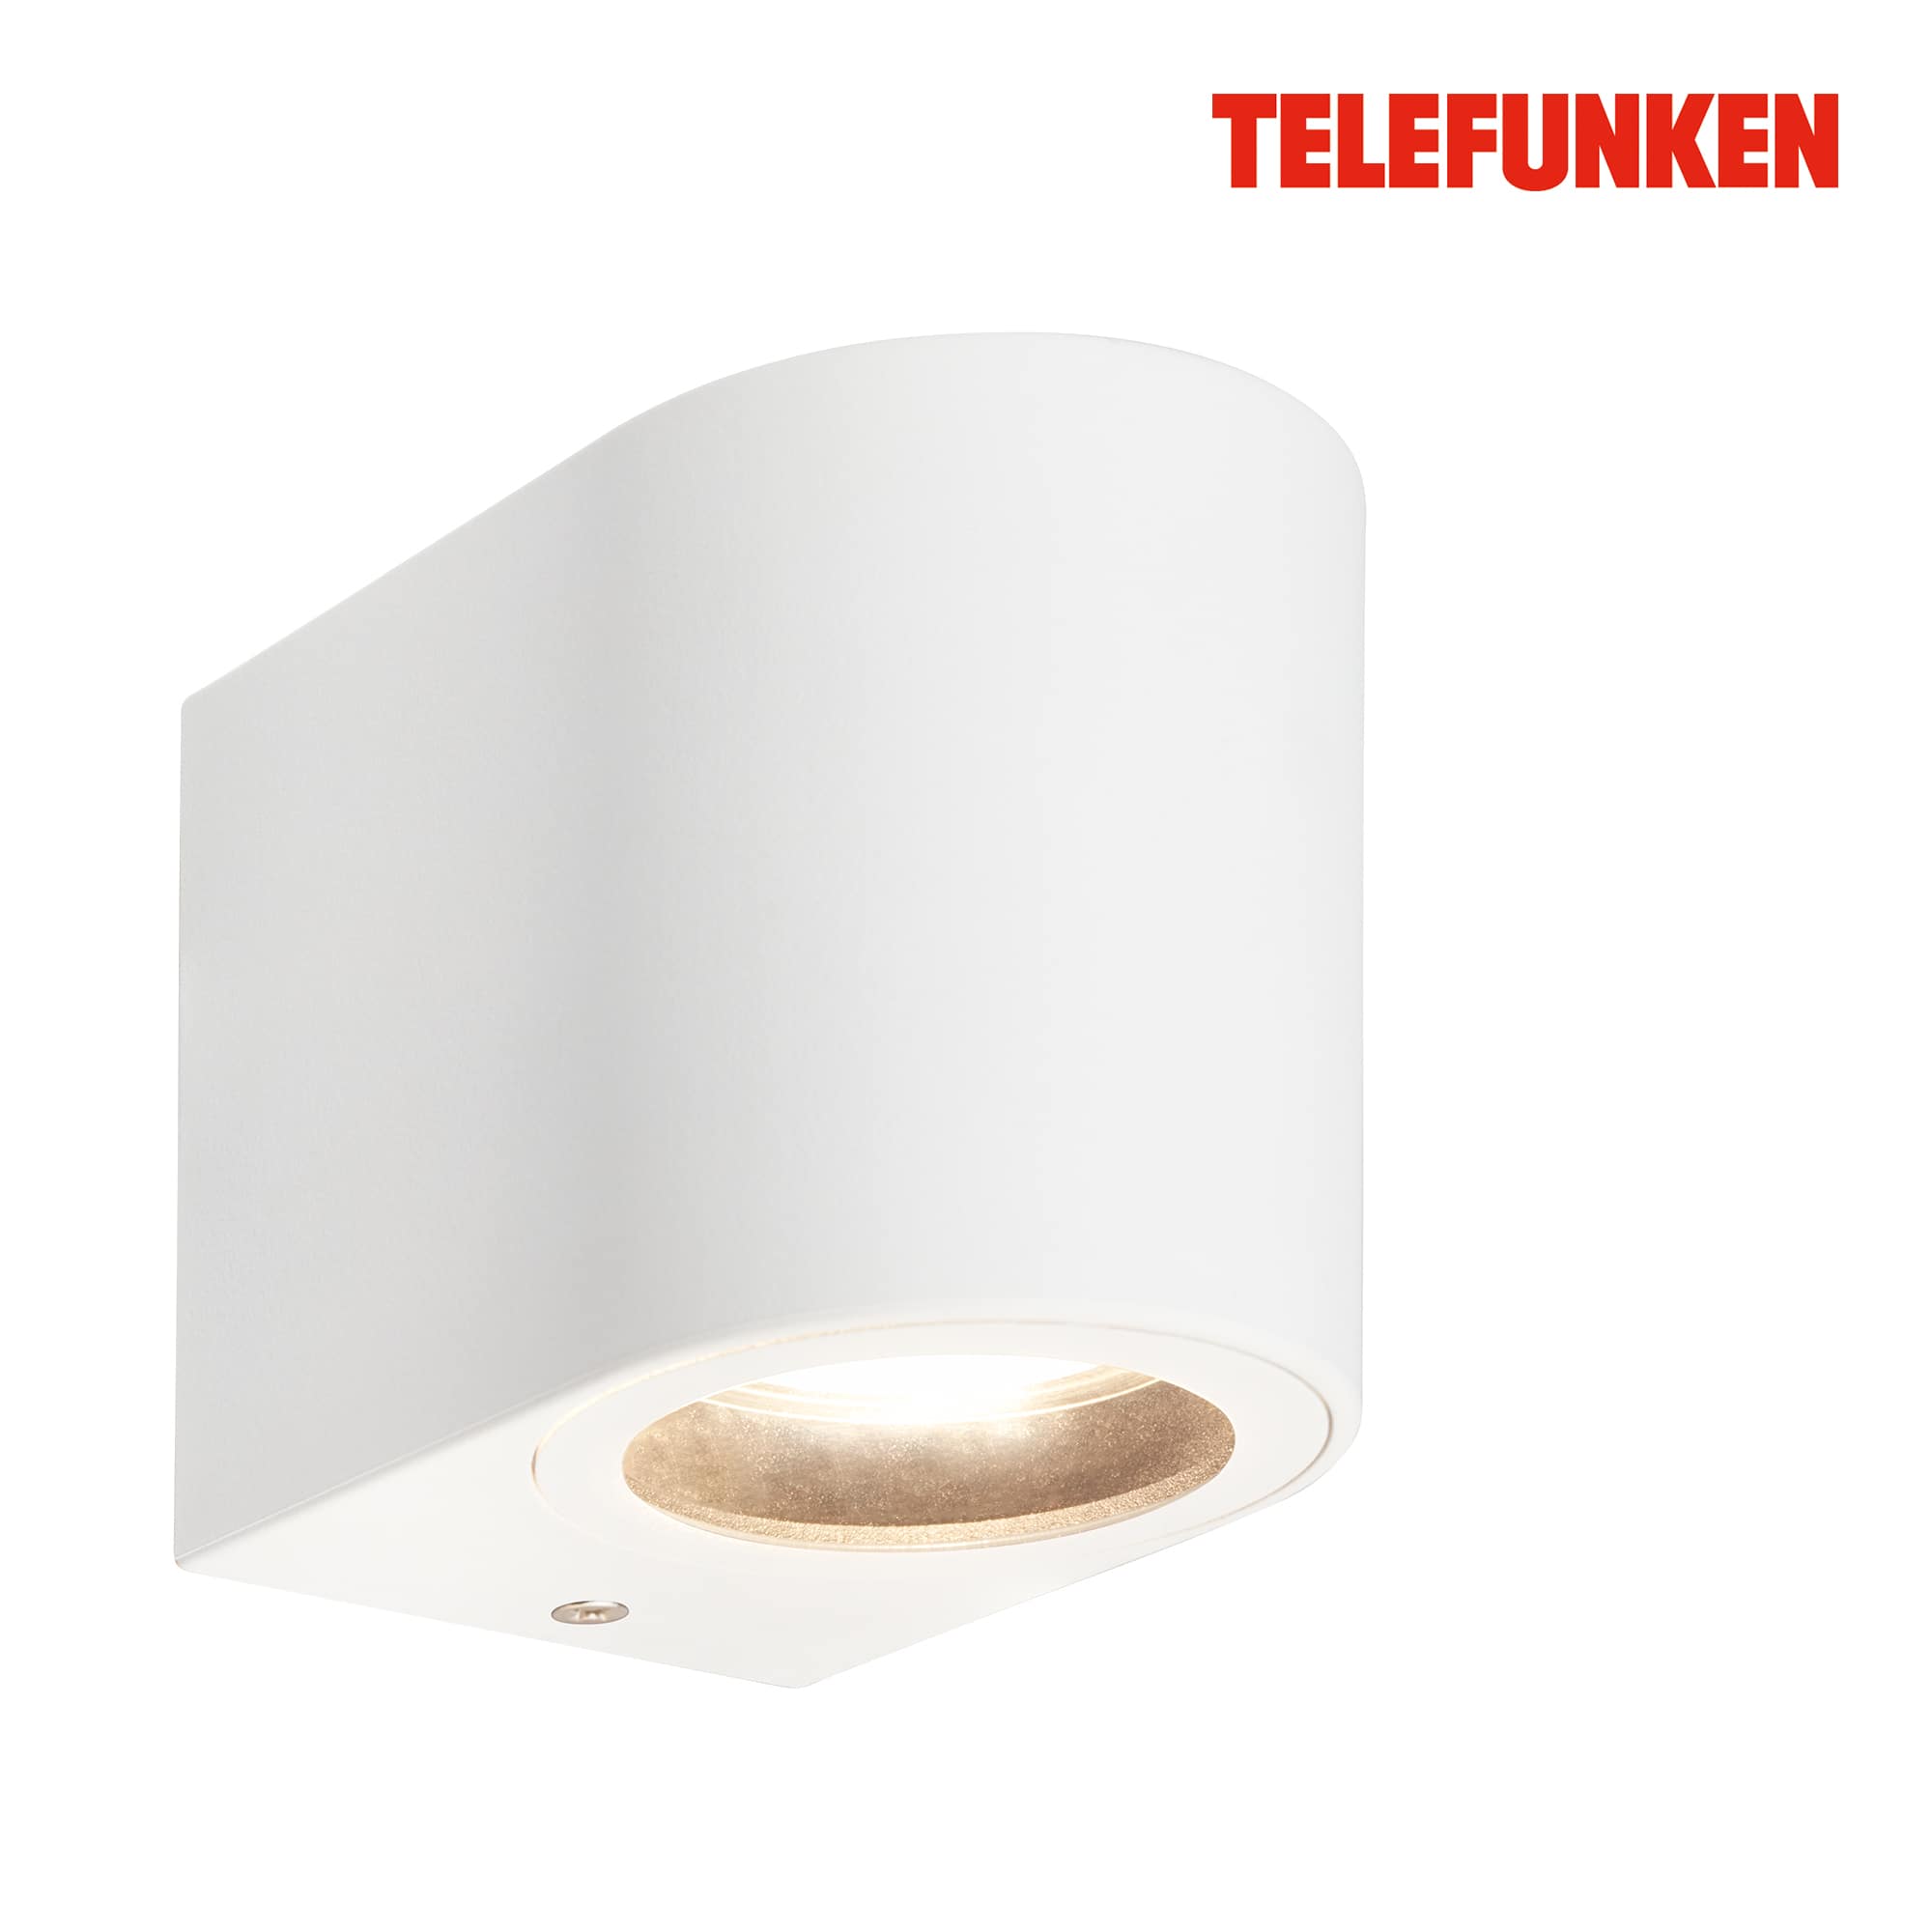 Lampada da parete Telefunken LED, protezione dagli spruzzi d'acqua, accensione/spegnimento tramite interruttore a parete